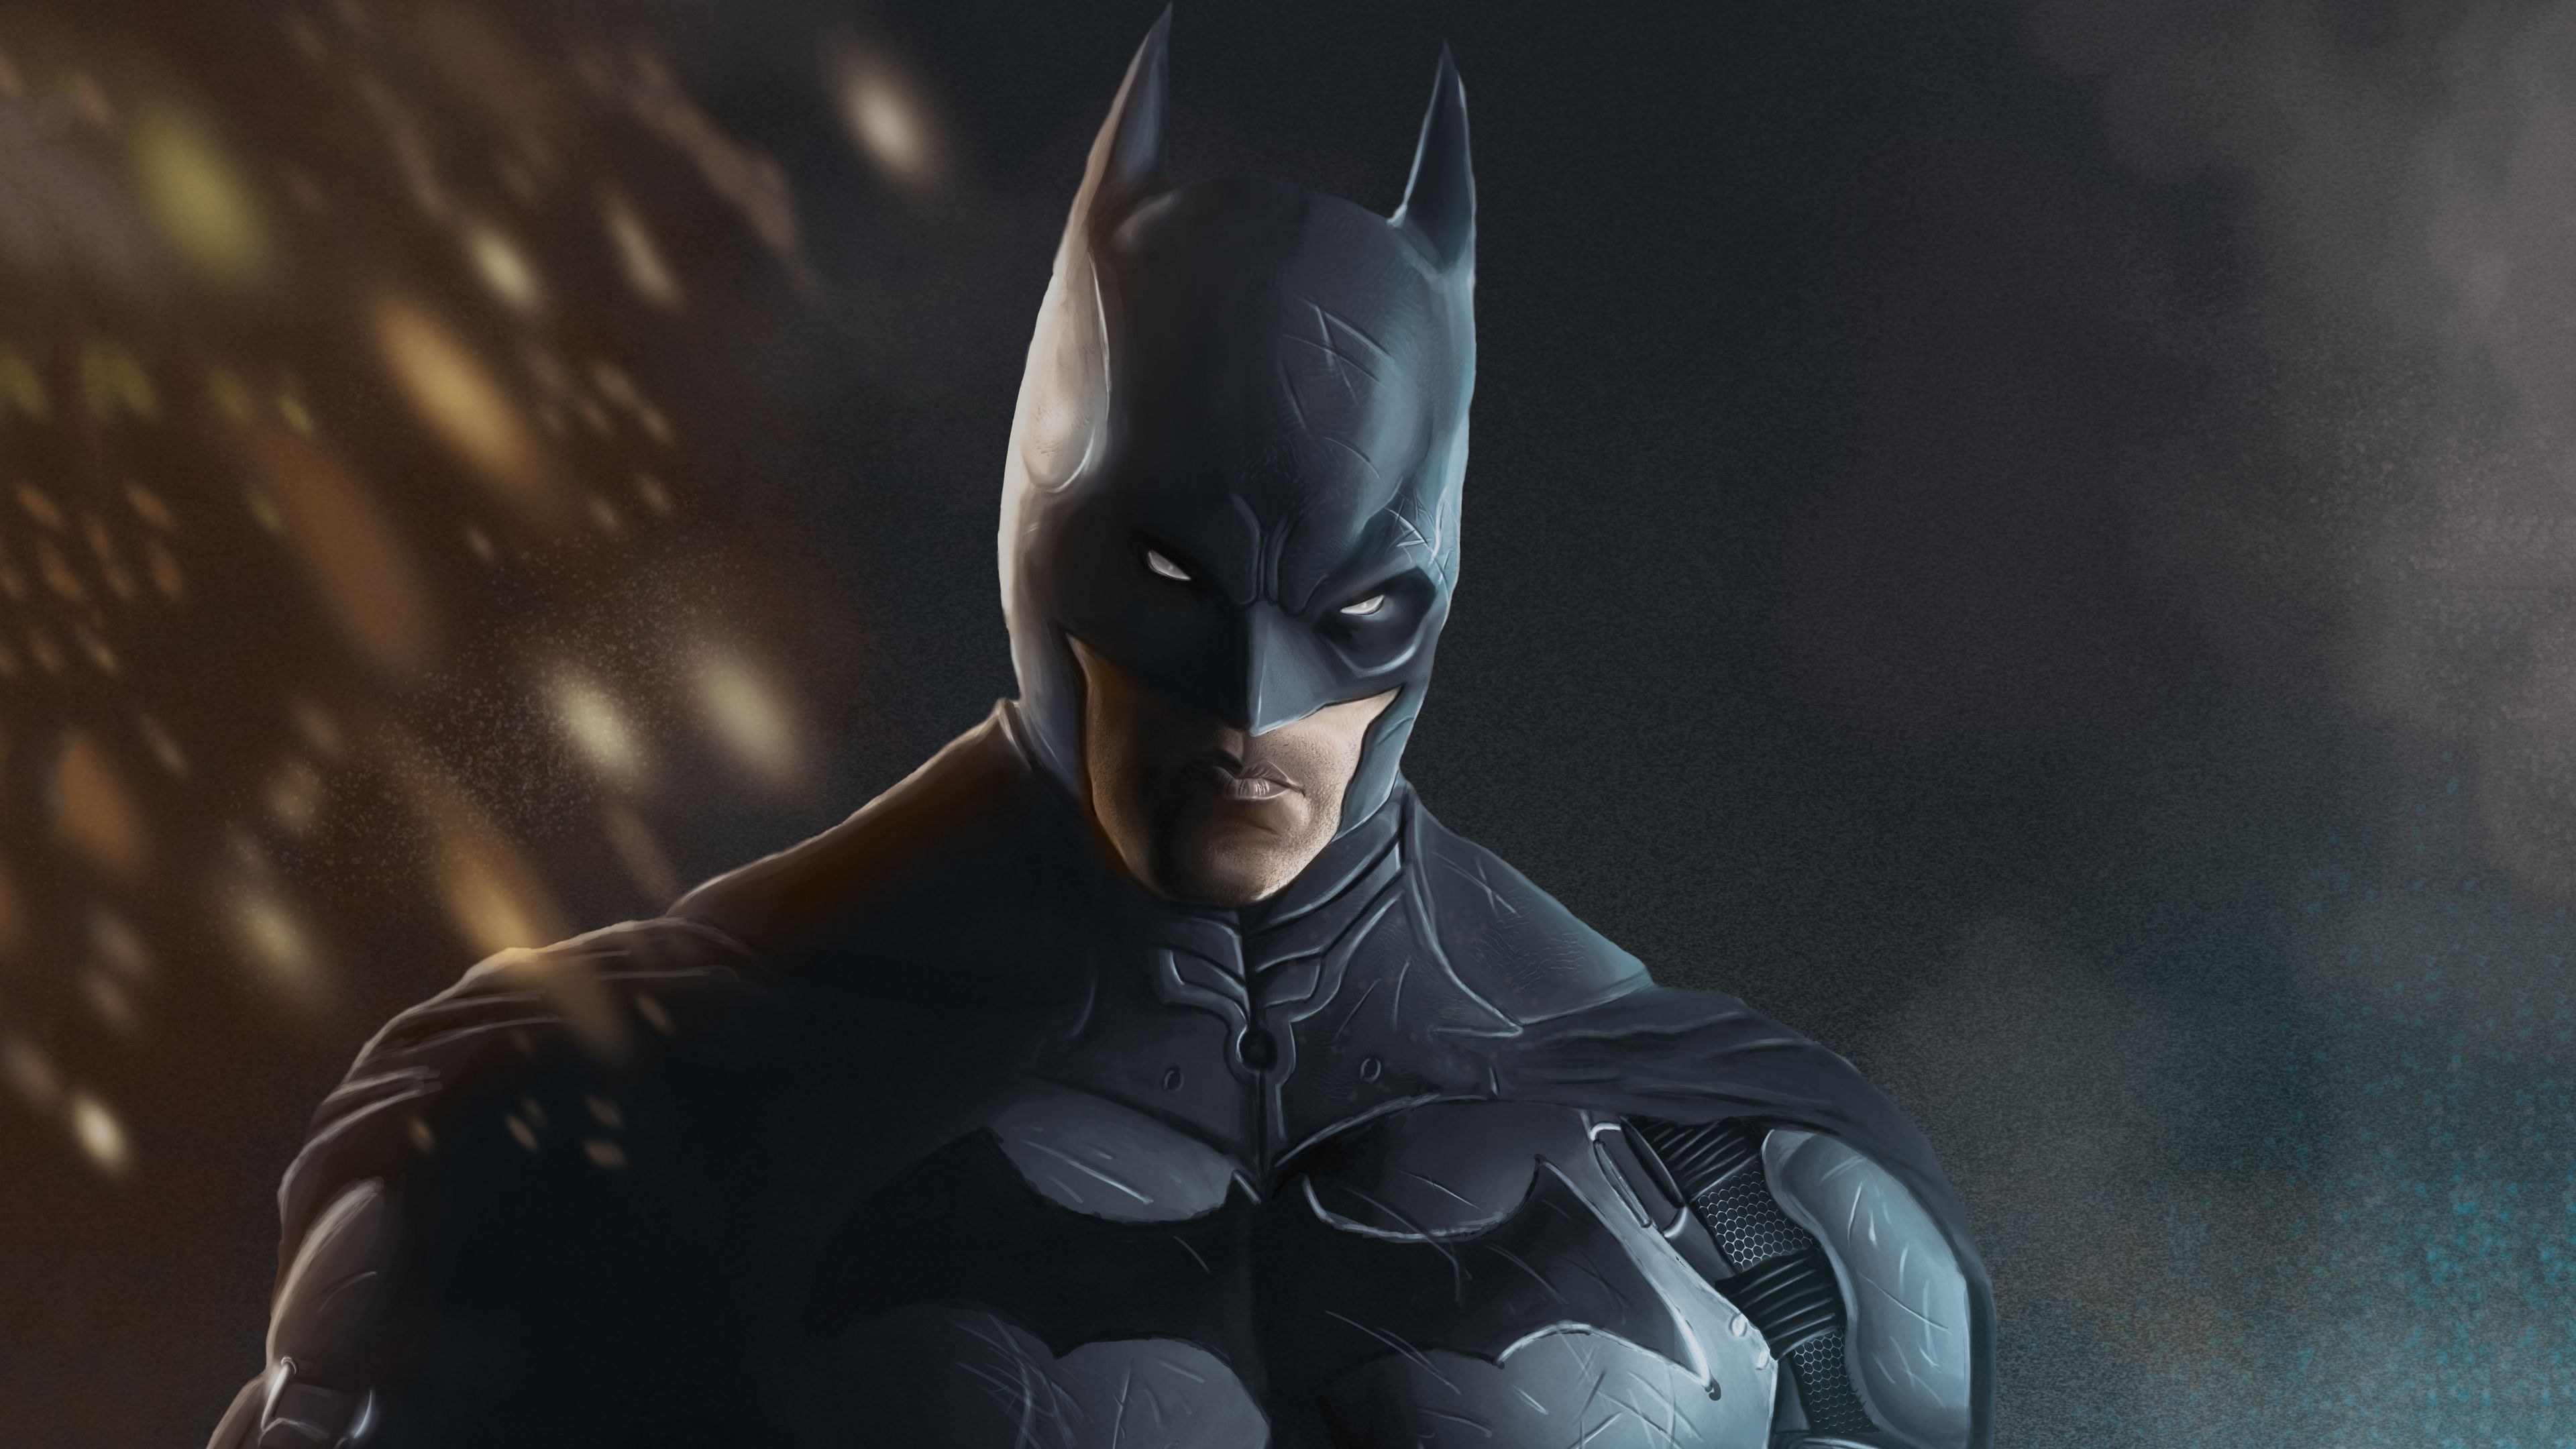 Batman Arkham Knight 5k Superheroes Wallpaper, Hd Wallpaper, Games Wallpaper, Batman Wallpaper, Batm. Batman Arkham Knight Wallpaper, Batman Wallpaper, Batman